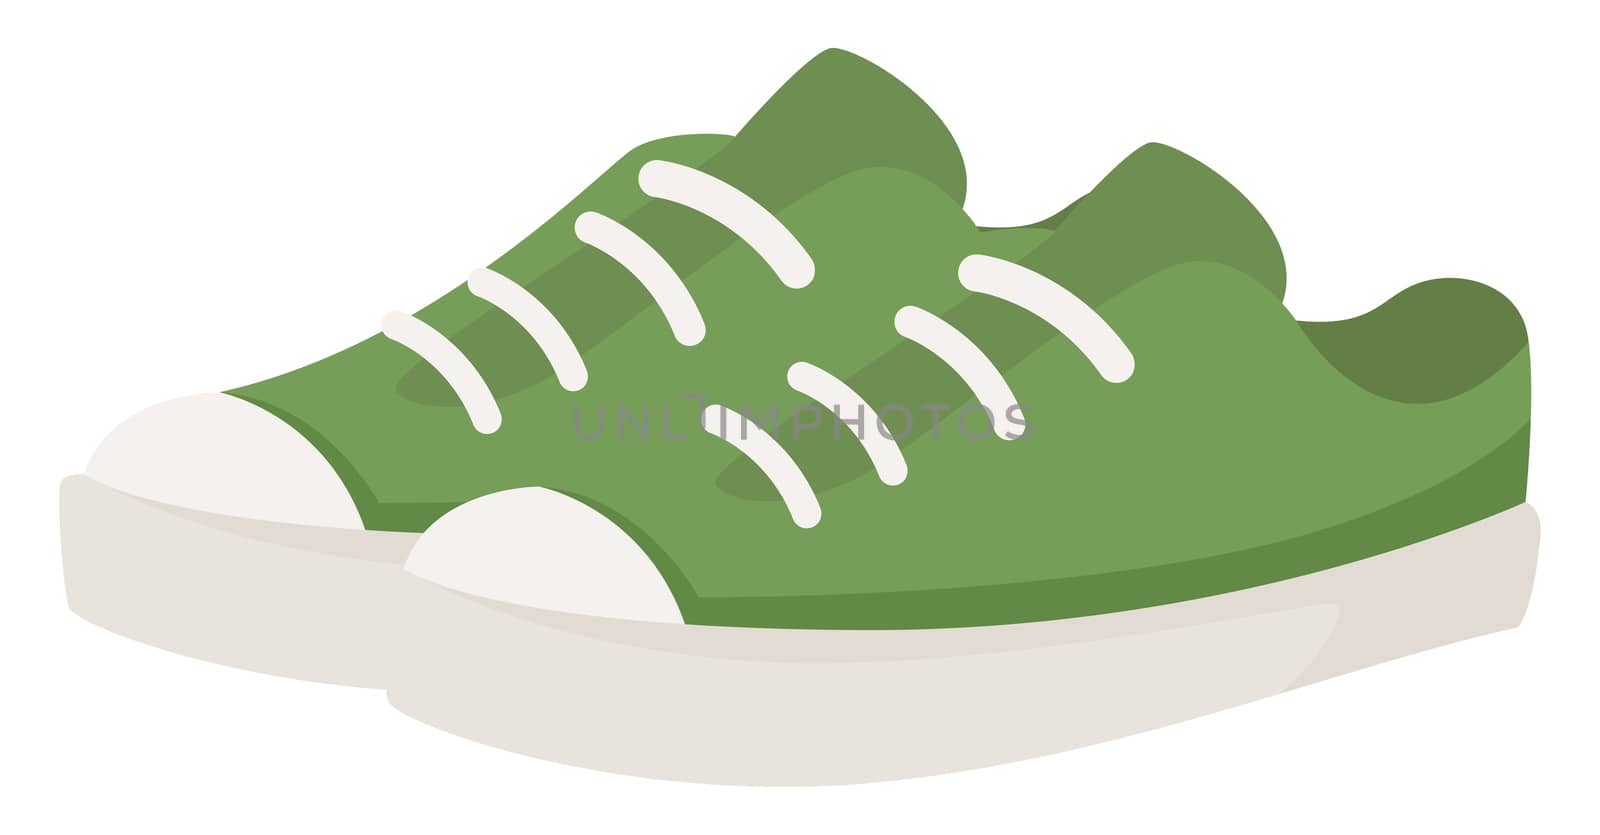 Green summer sneakers, illustration, vector on white background